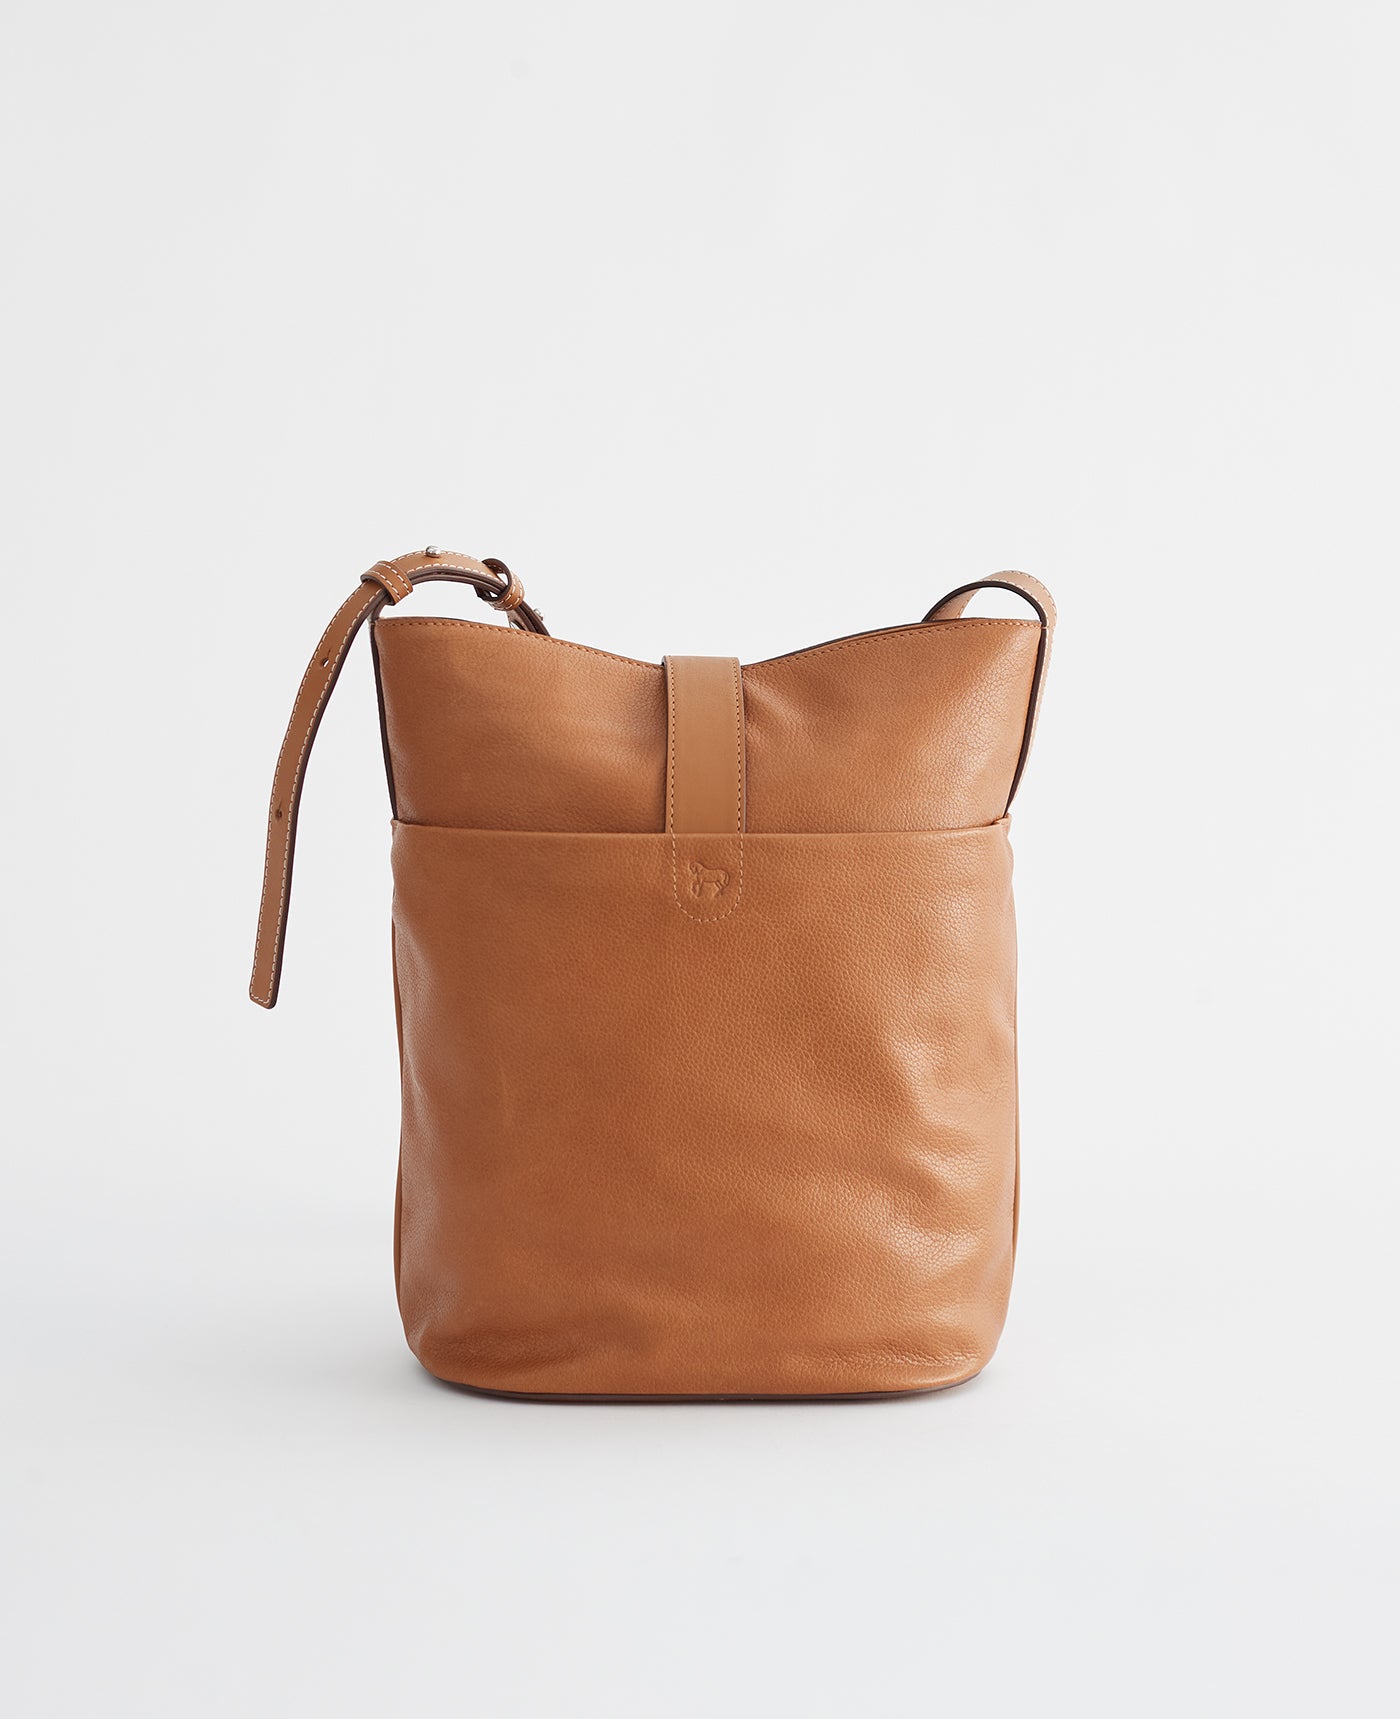 The Large Luella Bucket Bag: Caramel